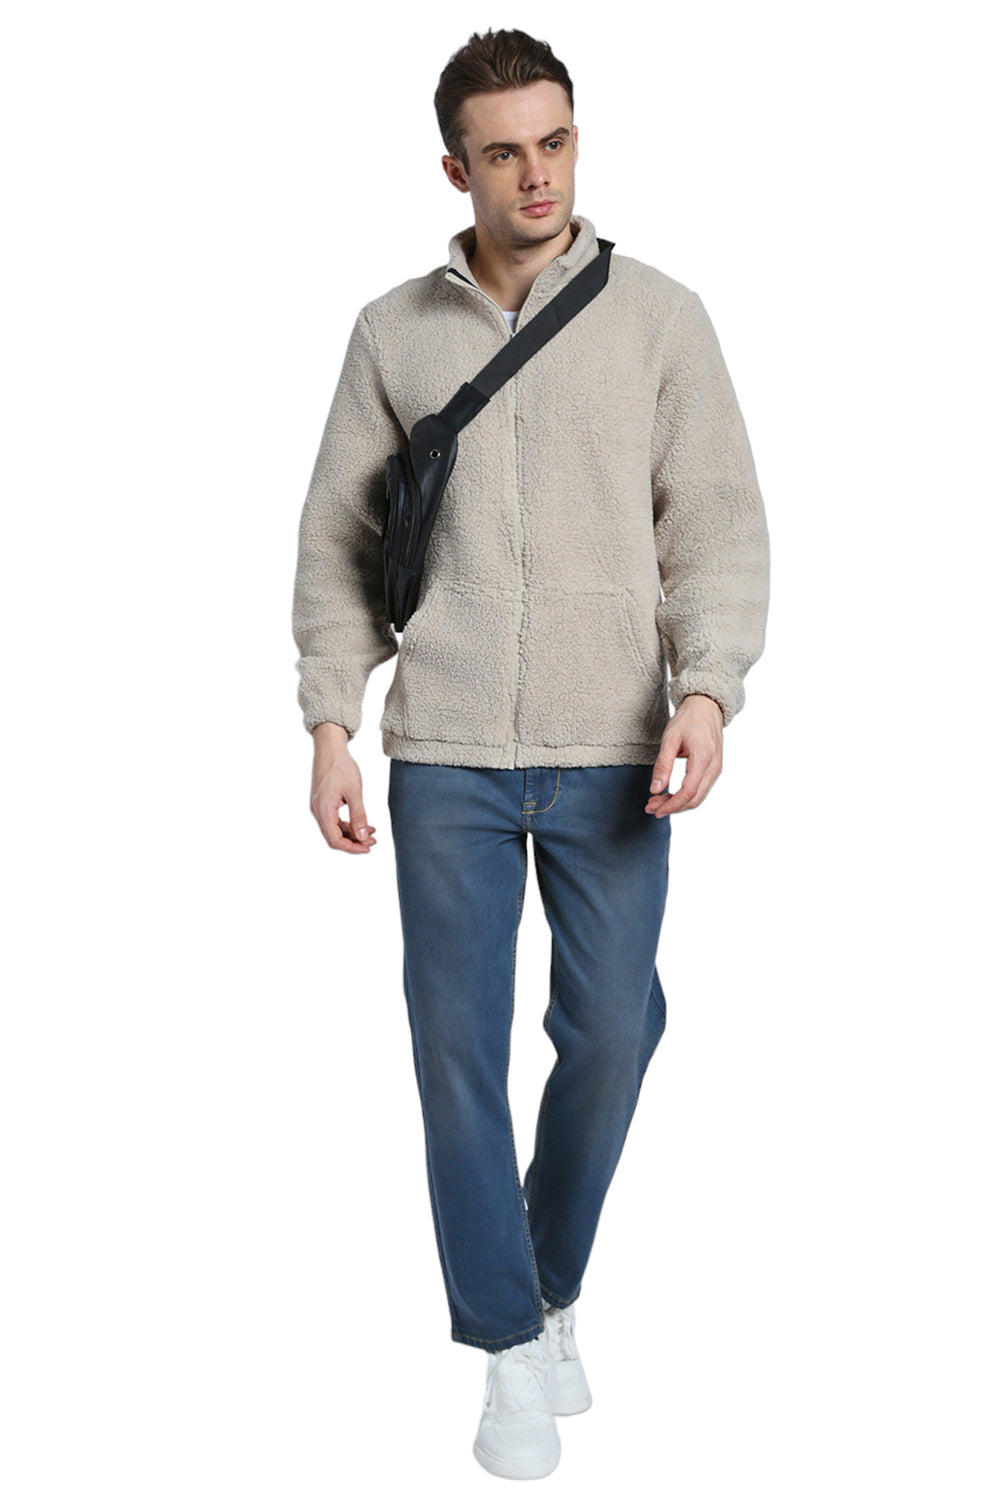 Dennis Lingo Men's Beige Solid Fleece High Neck Full Sleeve Light weight jacket Jackets